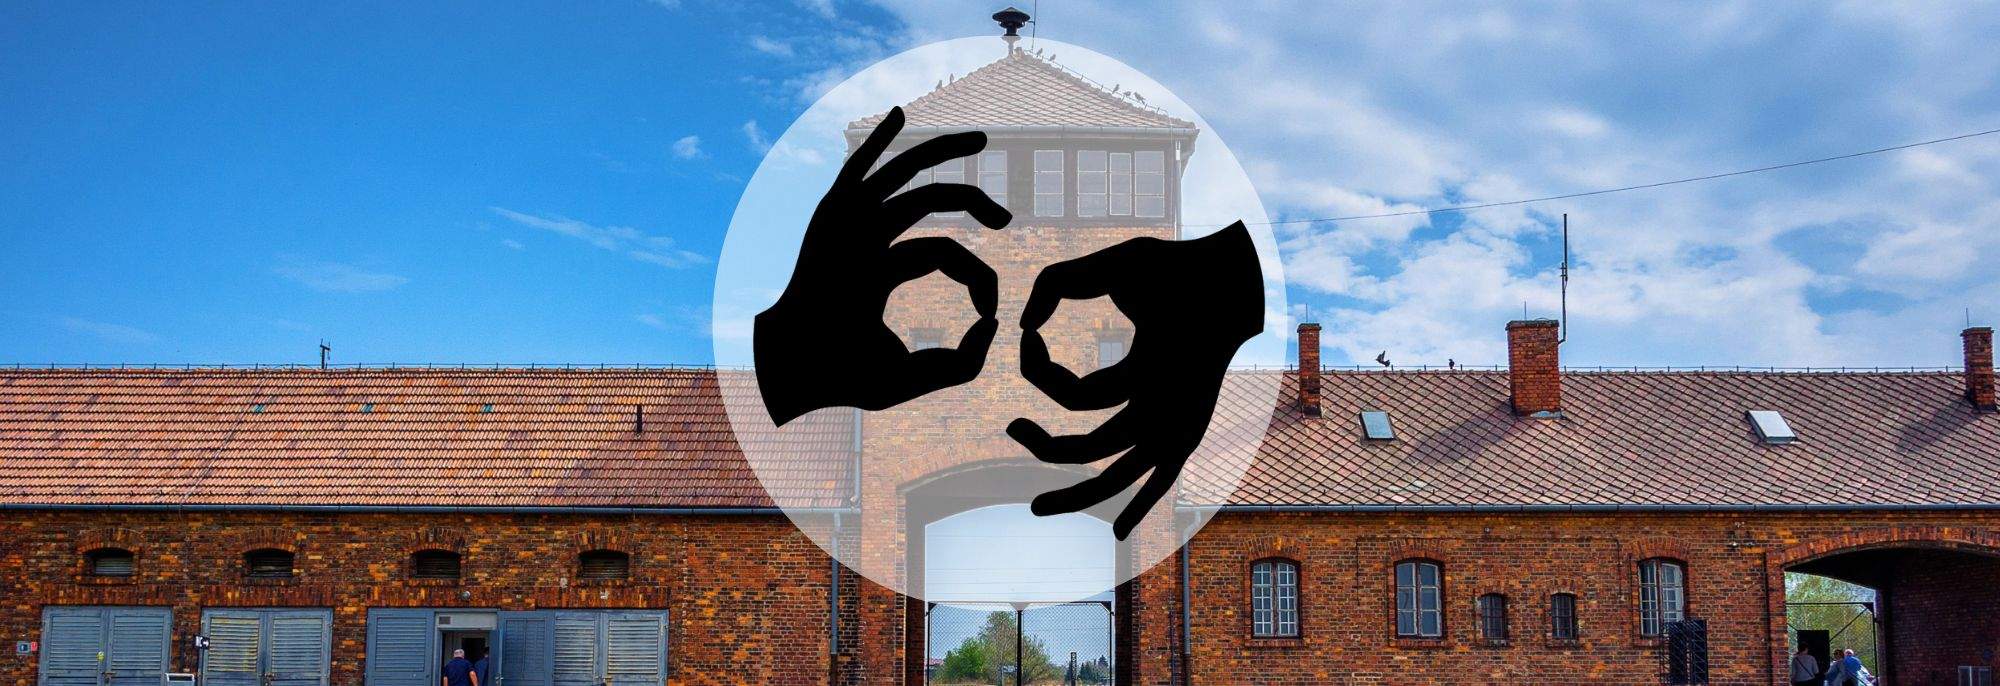 Auschwitz - Accessibilità per i non udenti